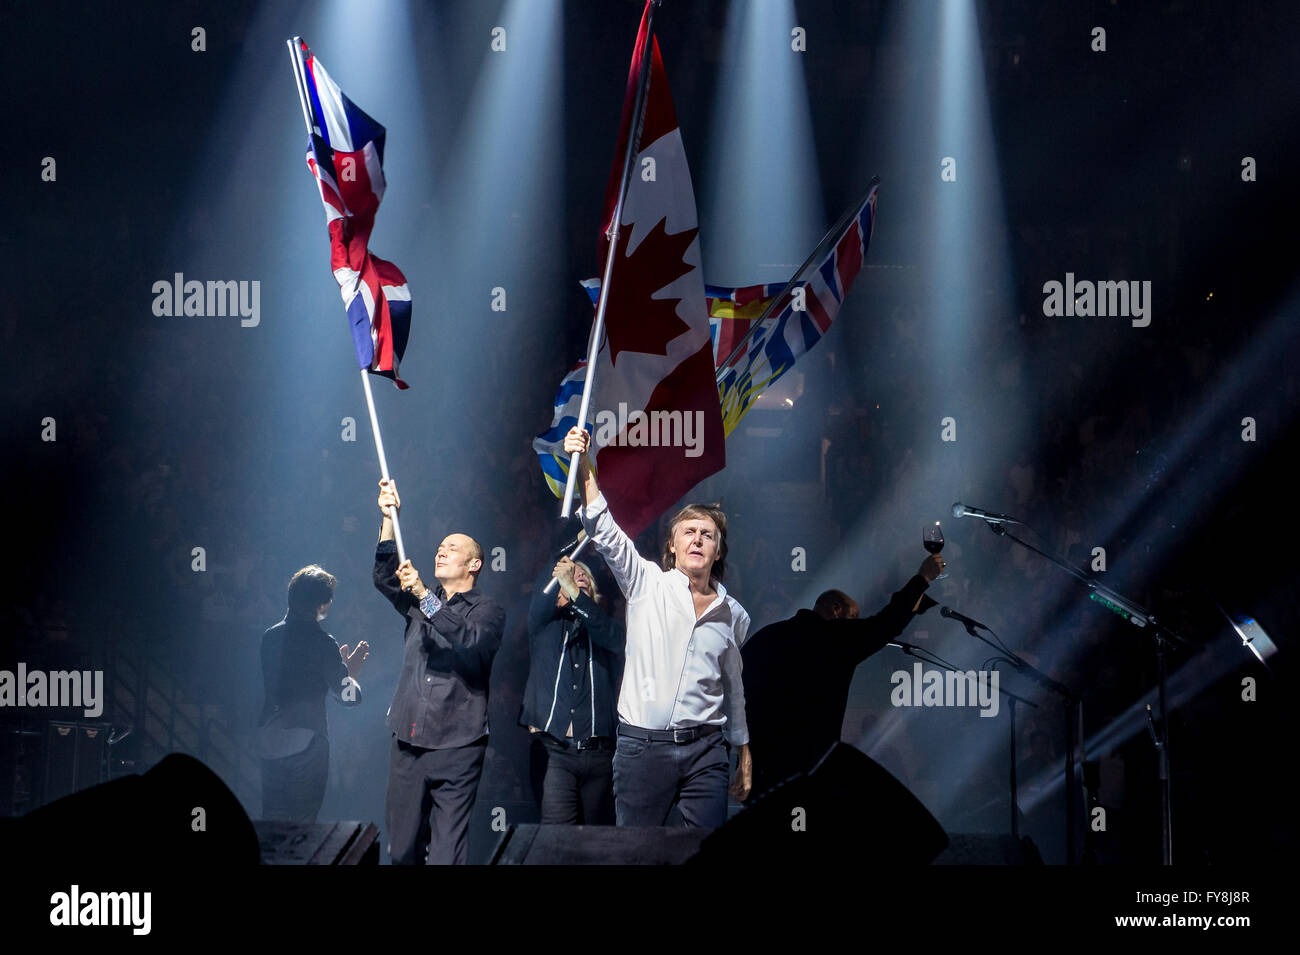 Paul McCartney von den Beatles während seiner "One On One" Tour @ Rogers Arena in Vancouver, BC am 20. April 2016 Stockfoto